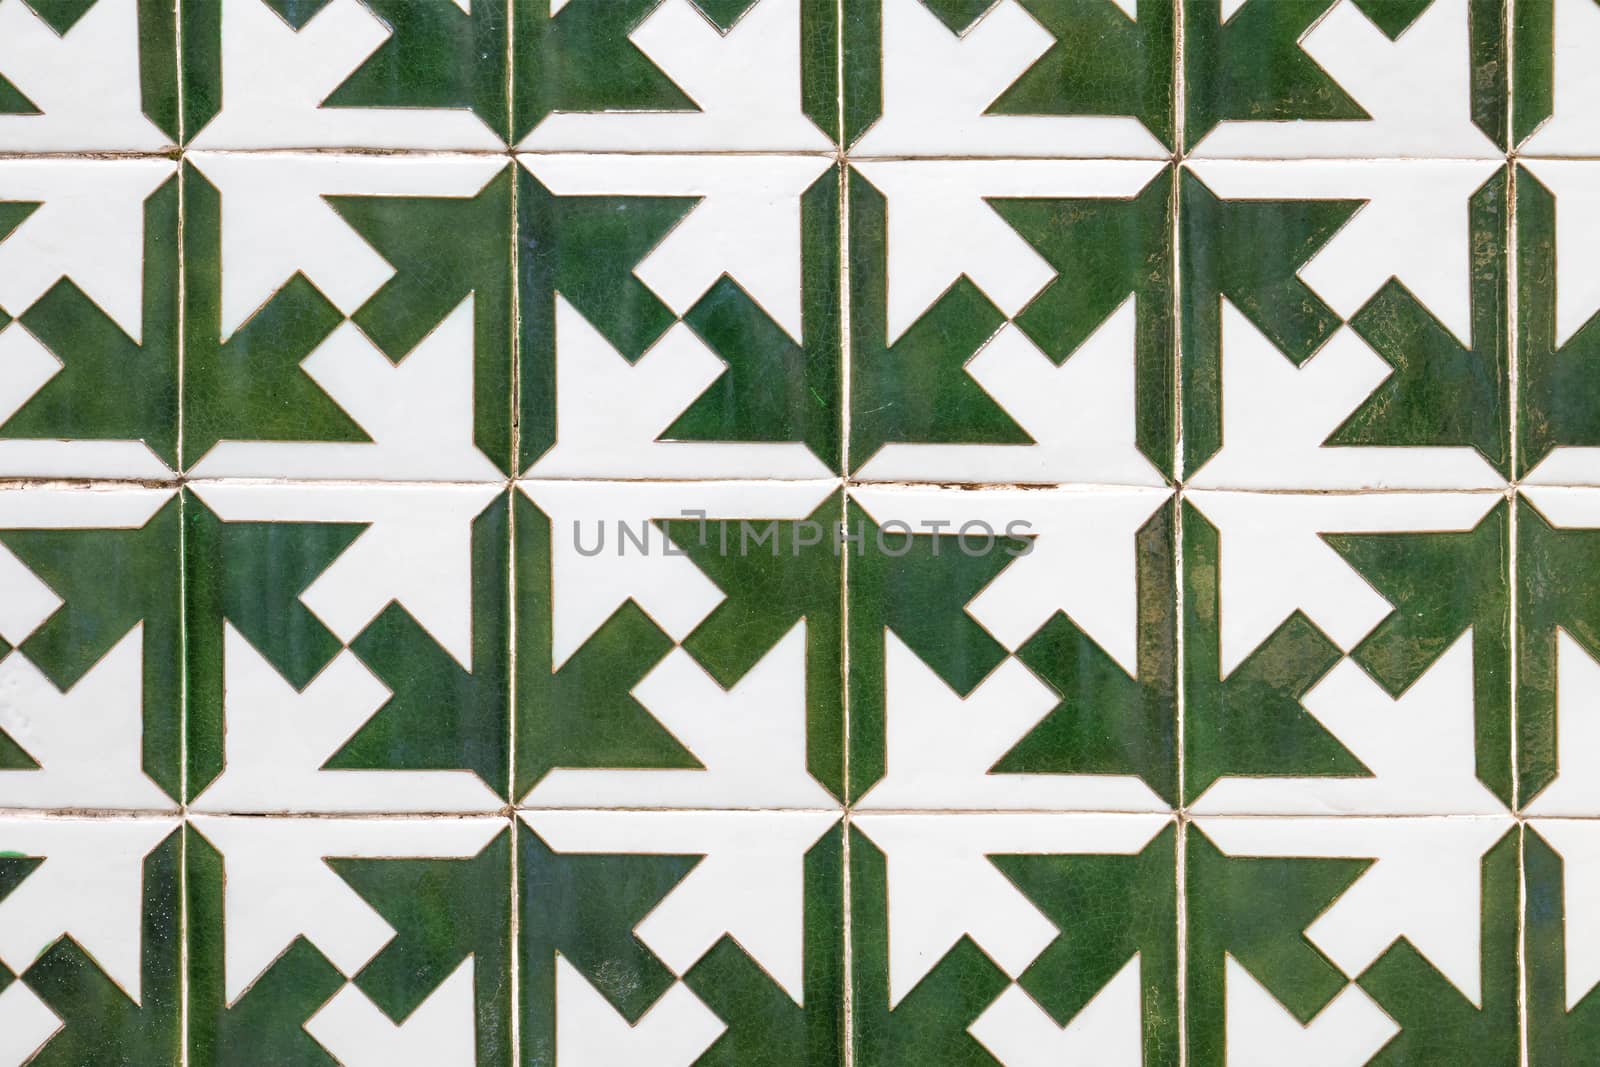 Portuguese typical tiles pattern by noimagination